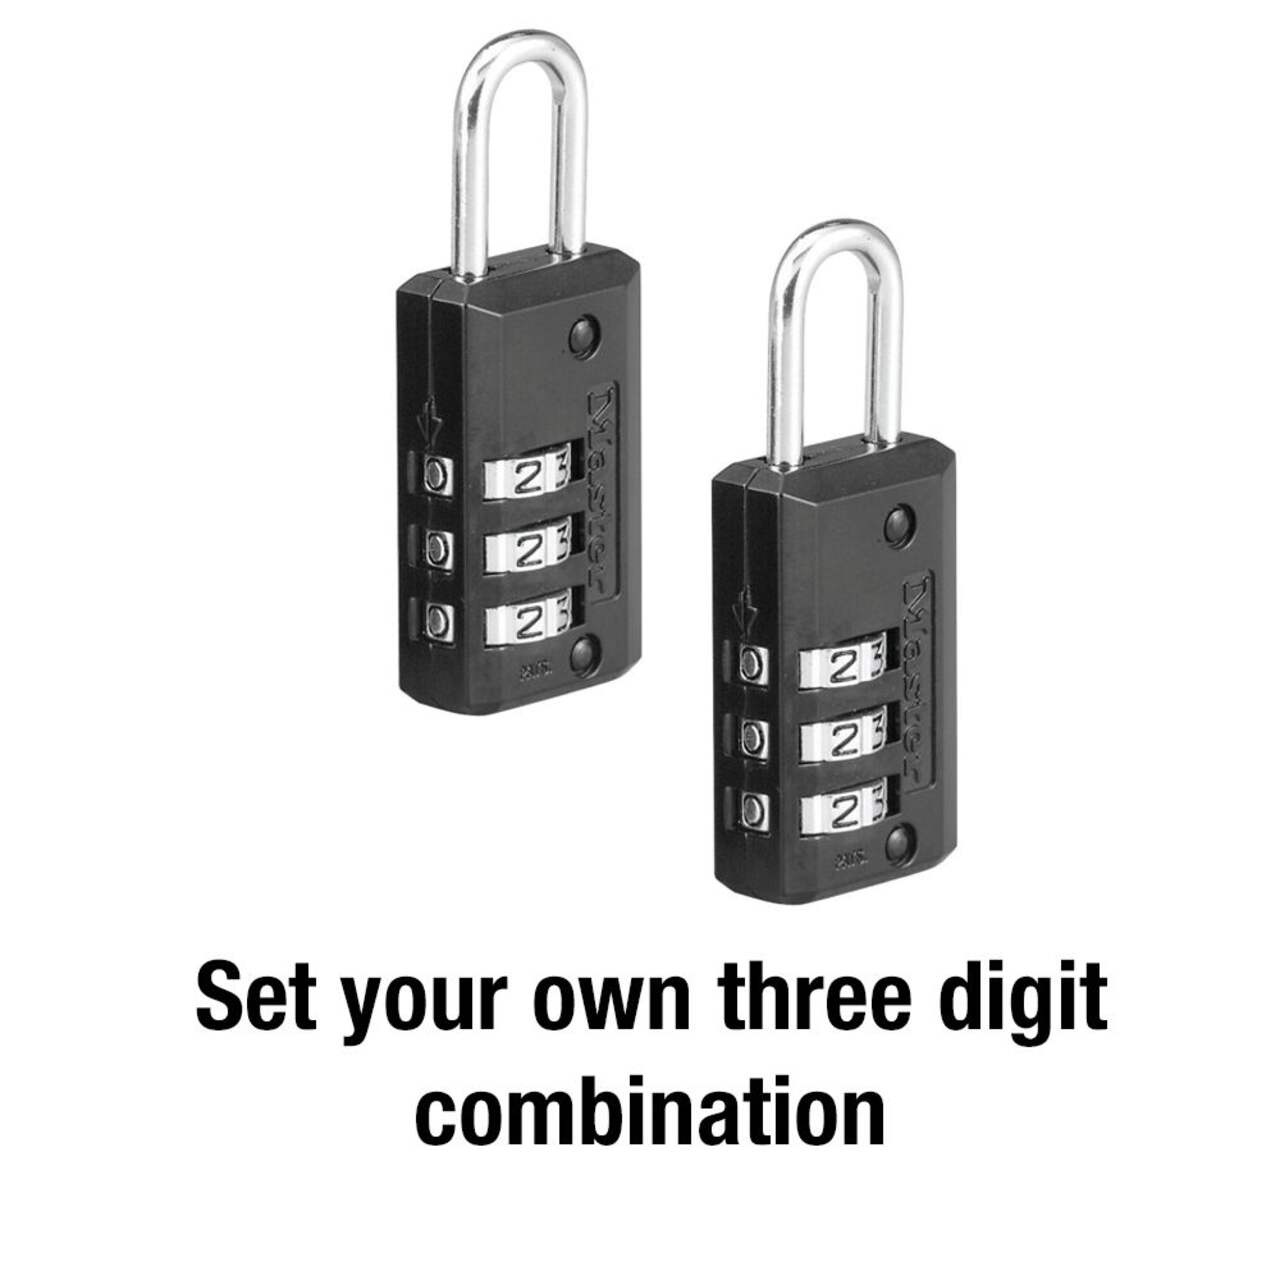 Master Lock Lock Reset Combination